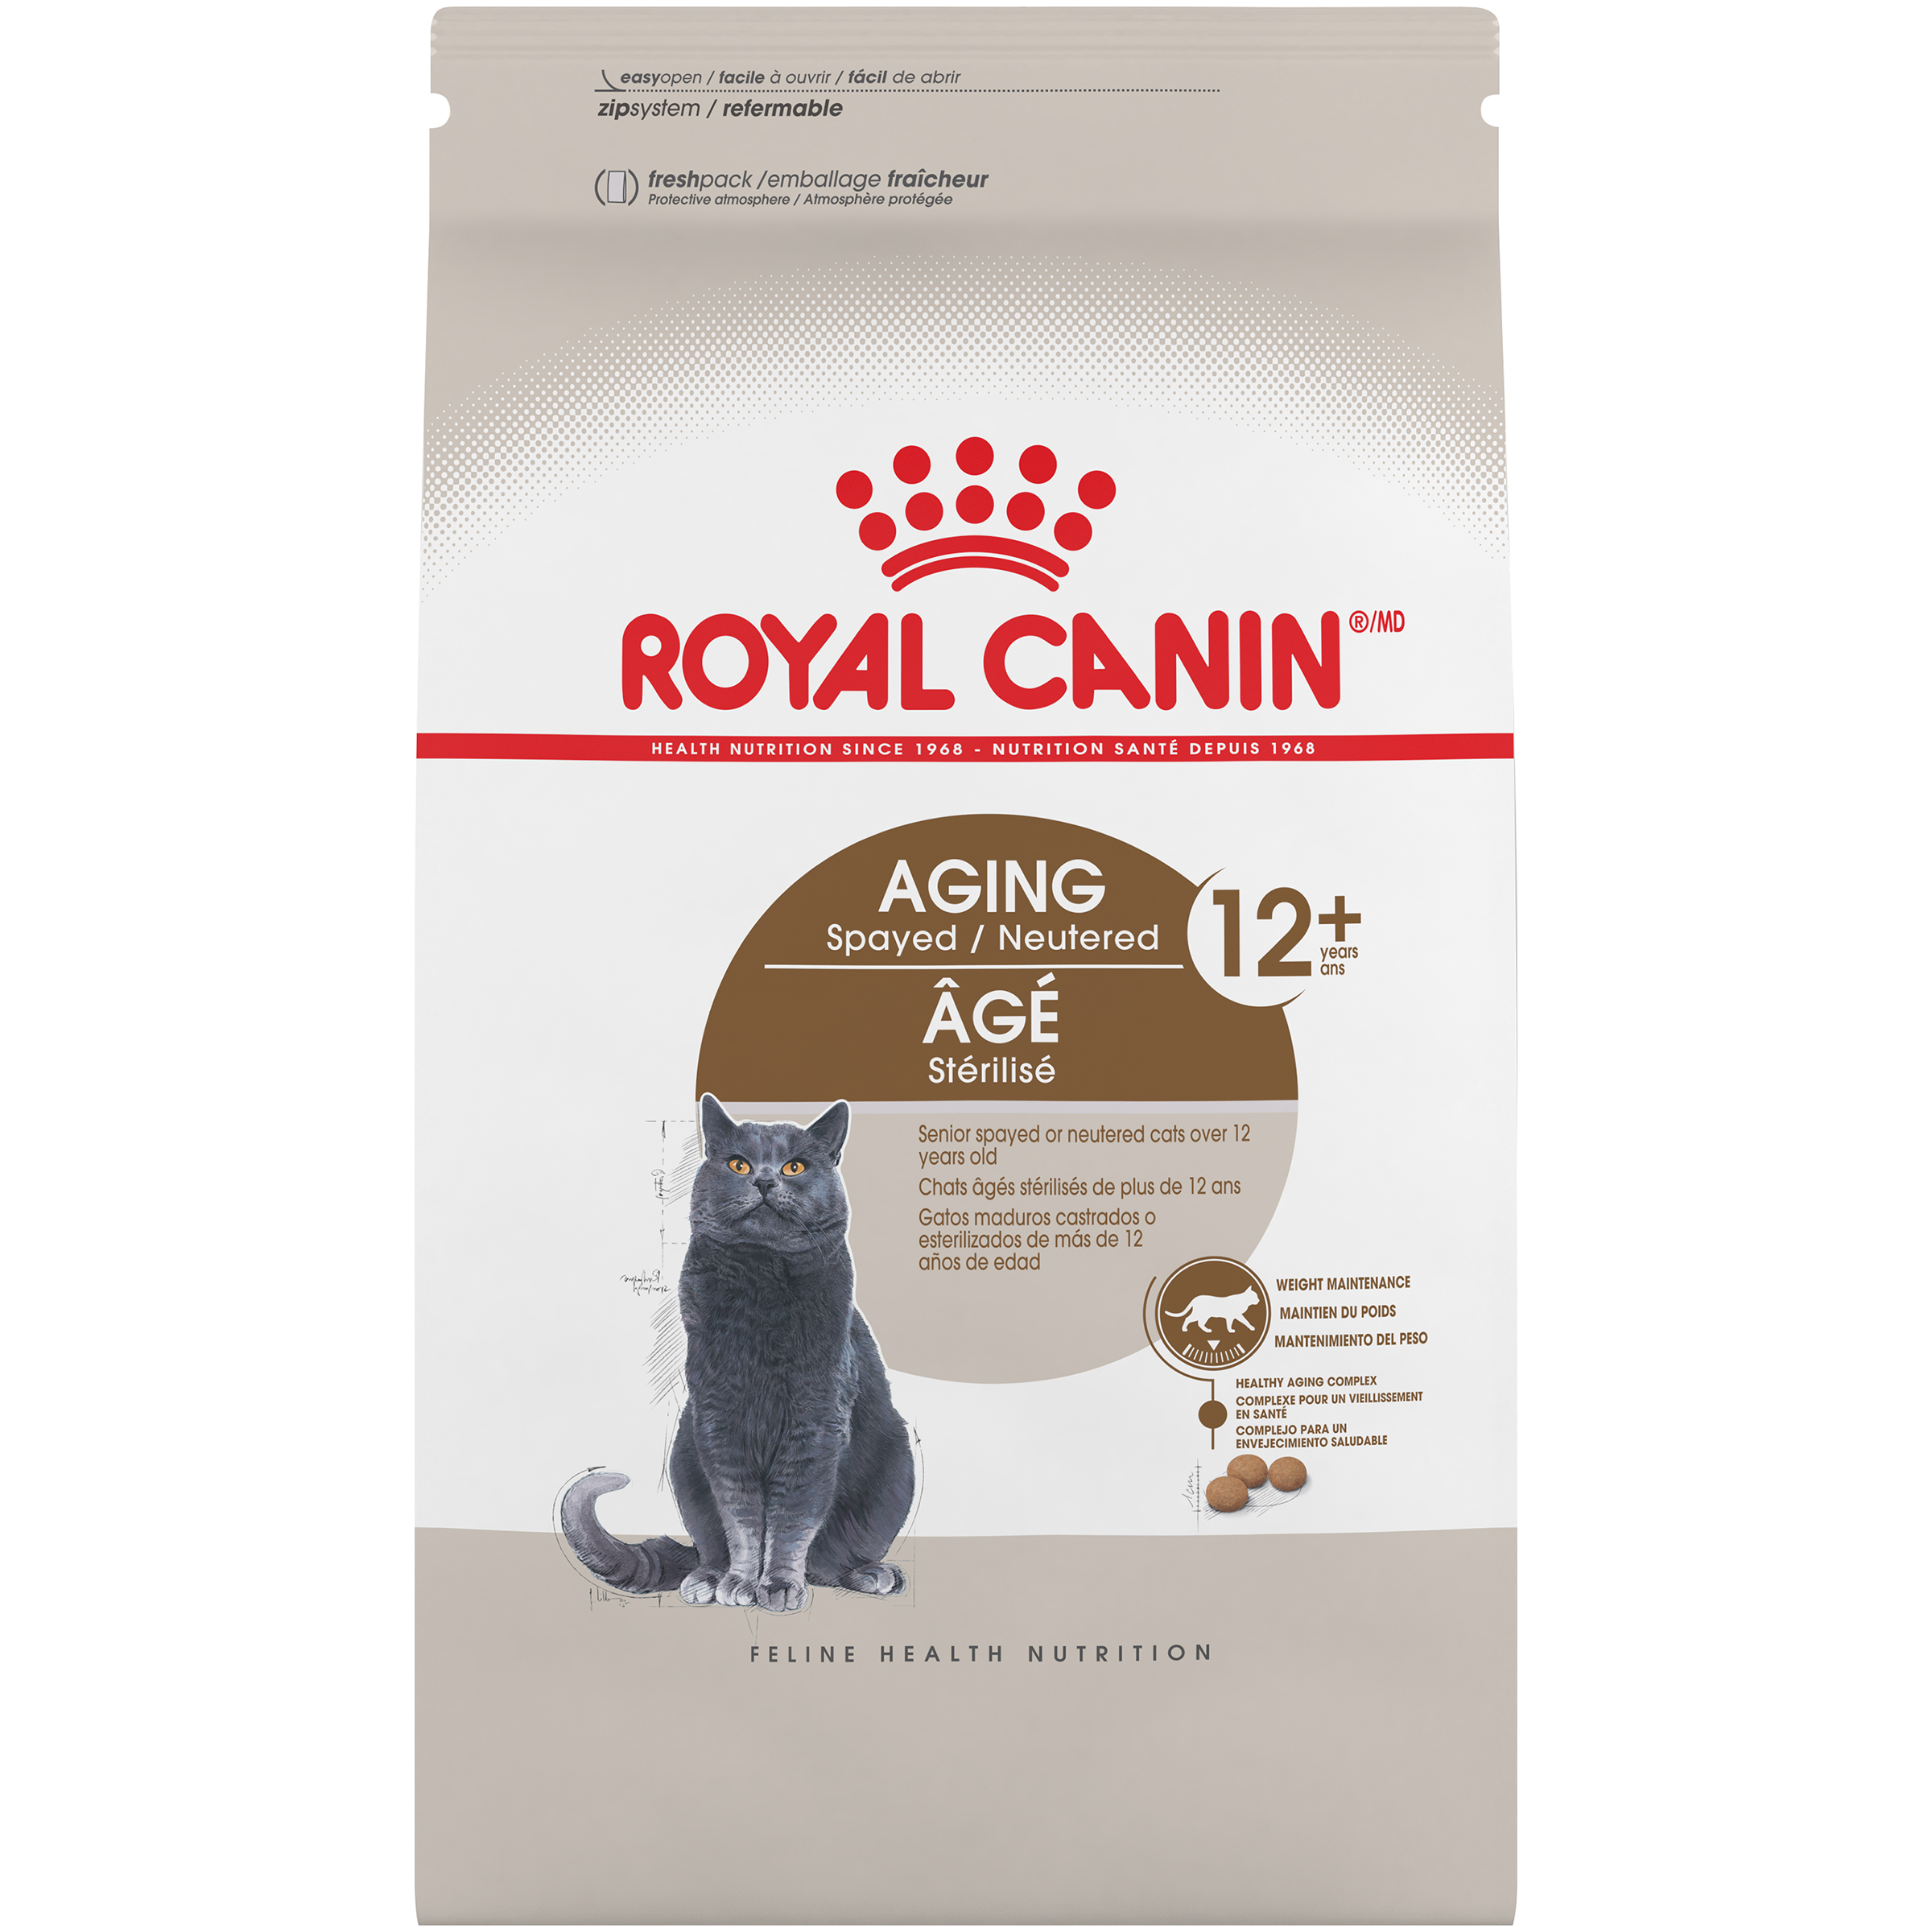 Royal canin ageing для кошек. Корм для кошек Роял Канин +12. Royal Canin Sterilized сухой корм. Роял Канин Стерилайзд 12+ 4кг. Роял Канин для стареющих кошек 7 +.